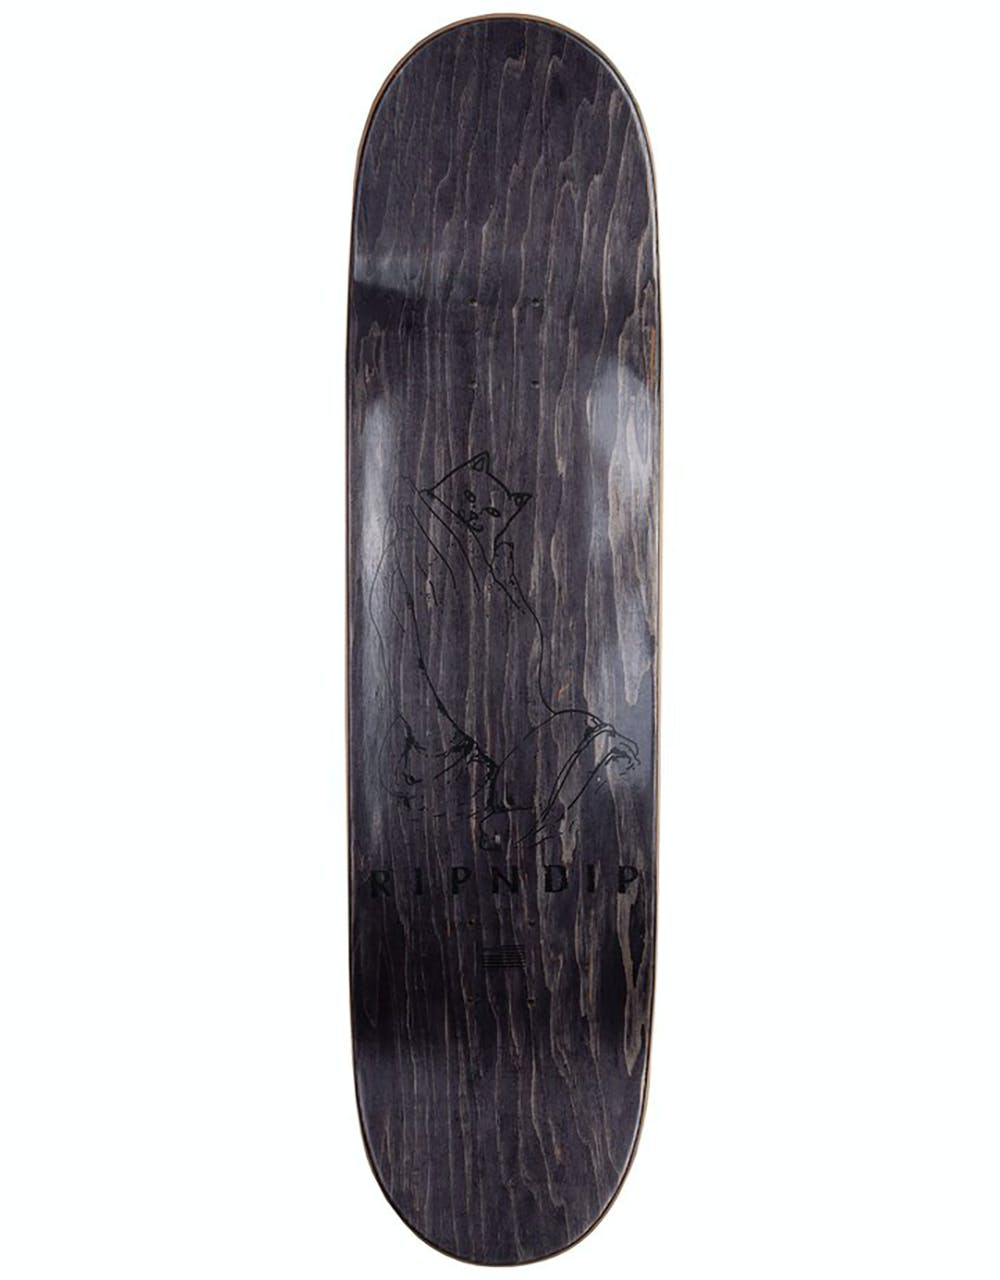 RIPNDIP Lord Nermal Skateboard Deck - 8"